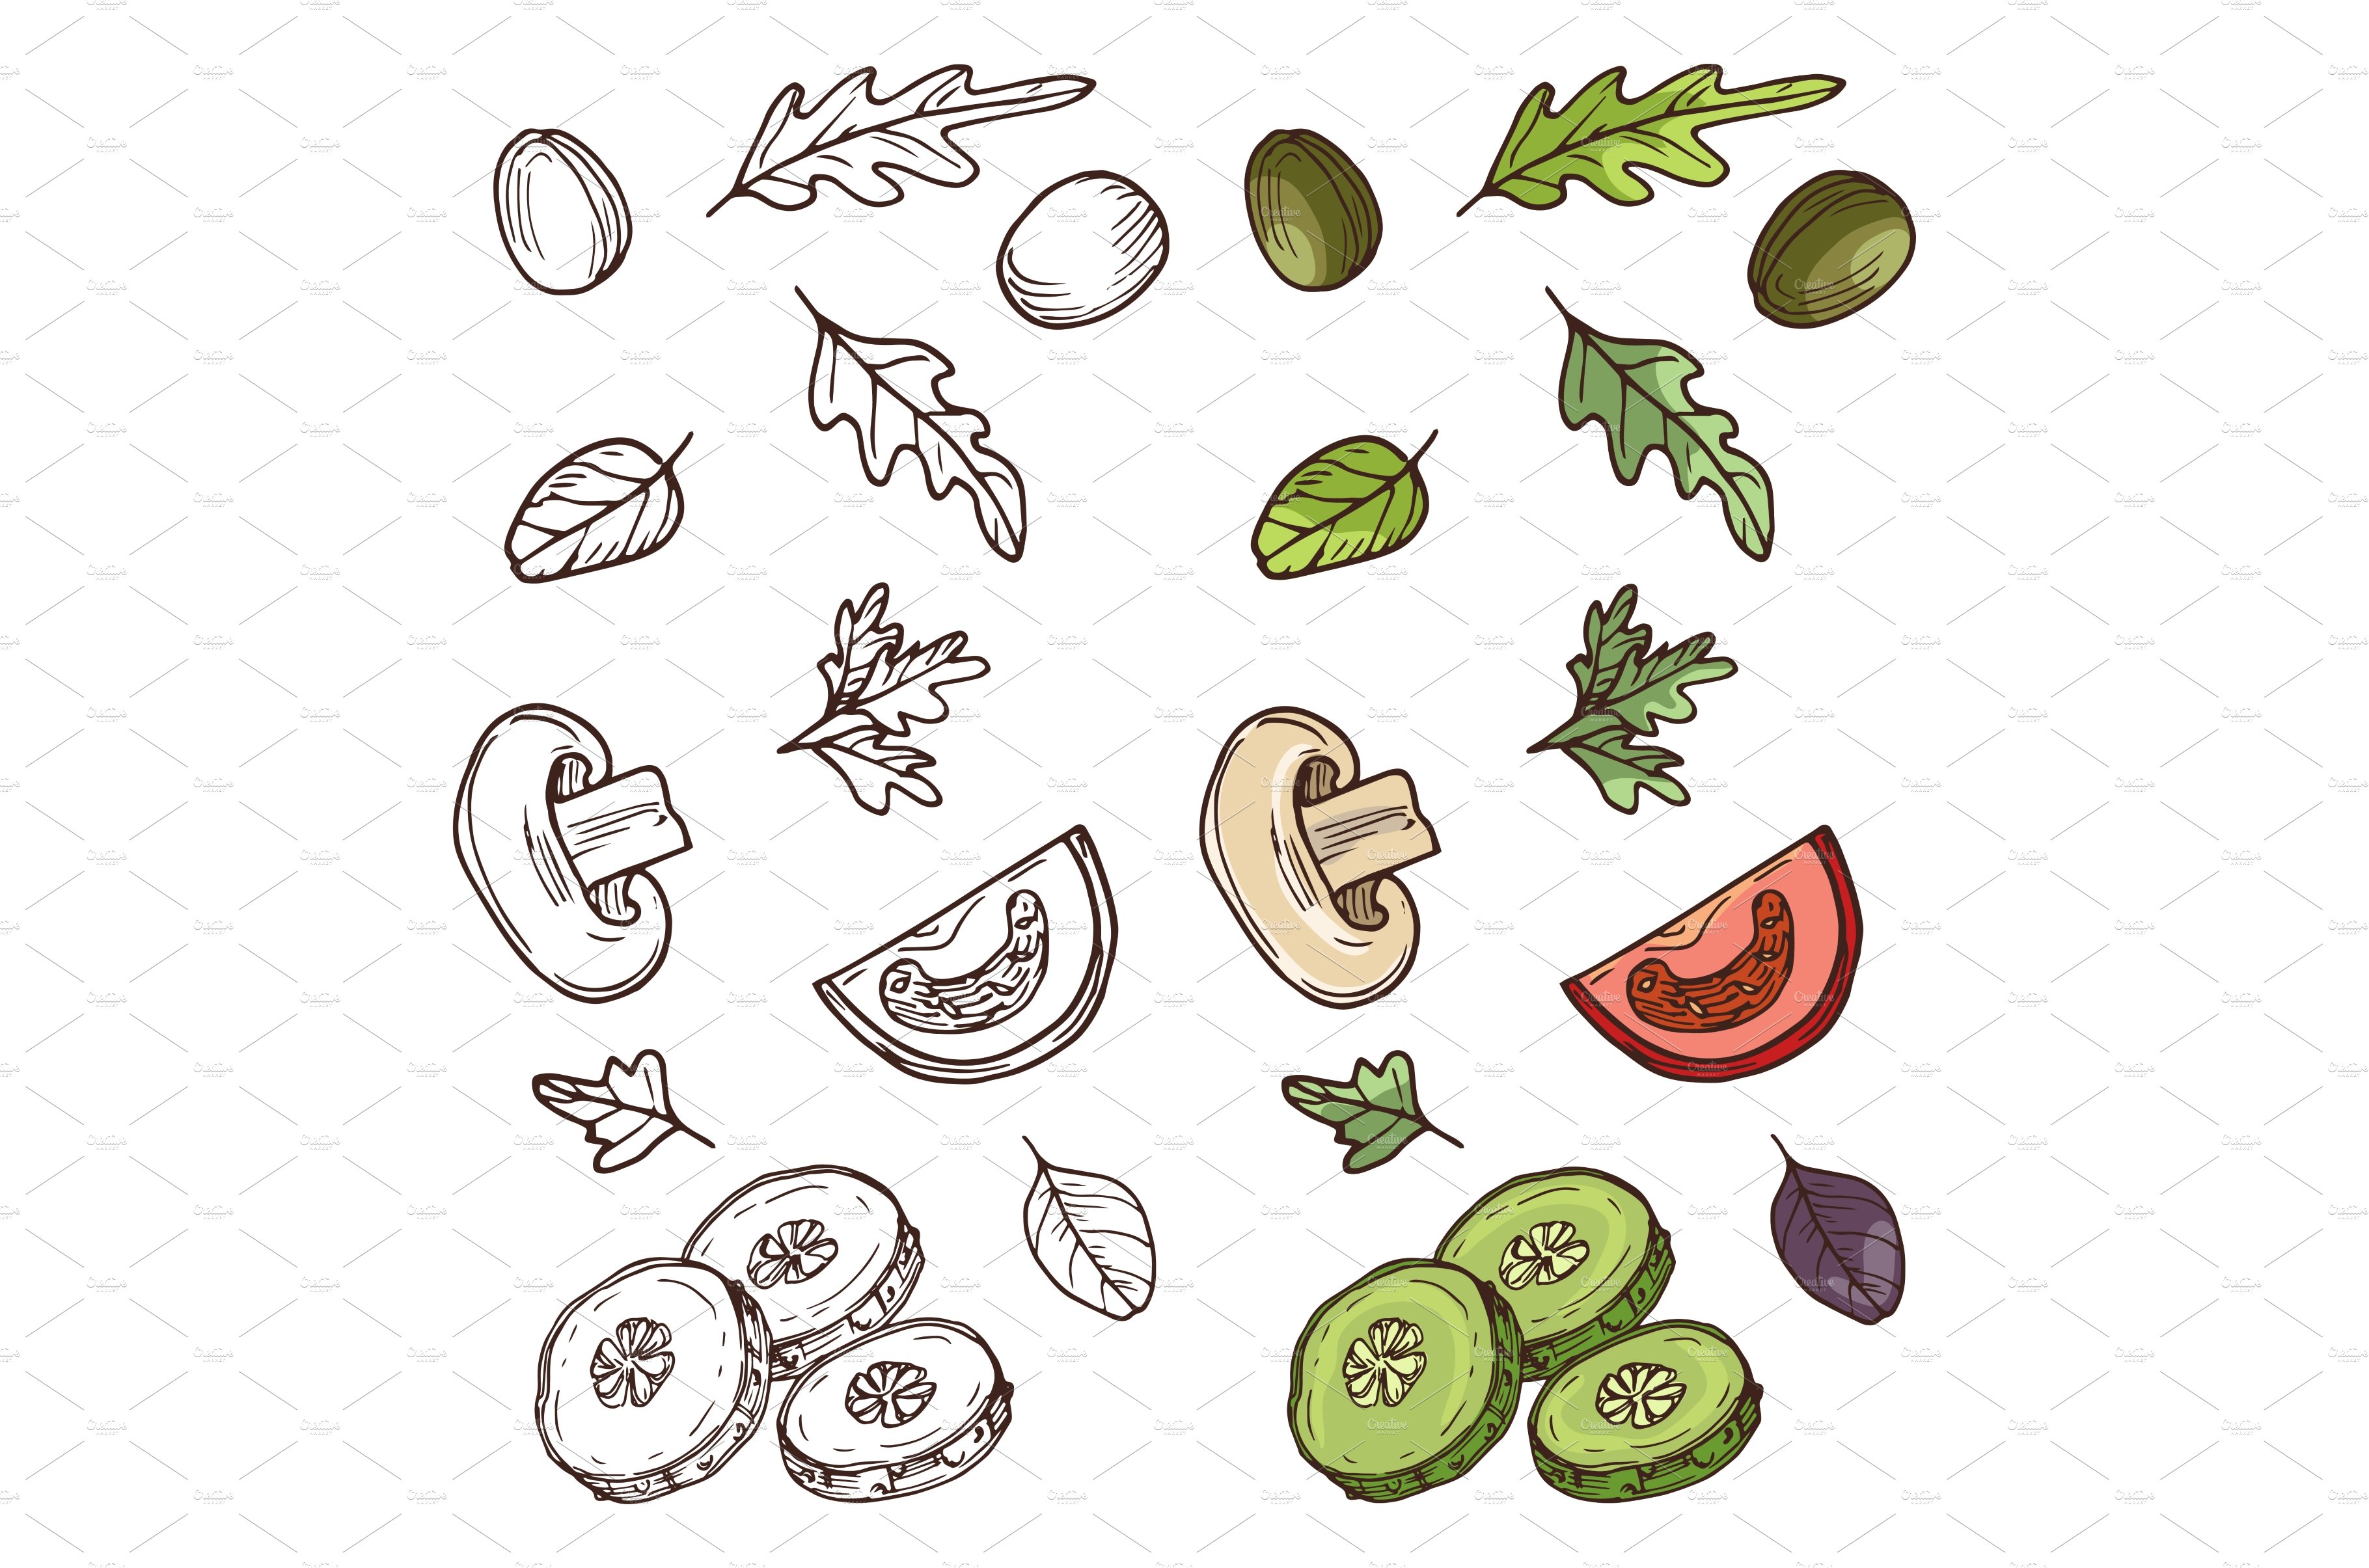 Hand drawn vegan salad ingredients cover image.